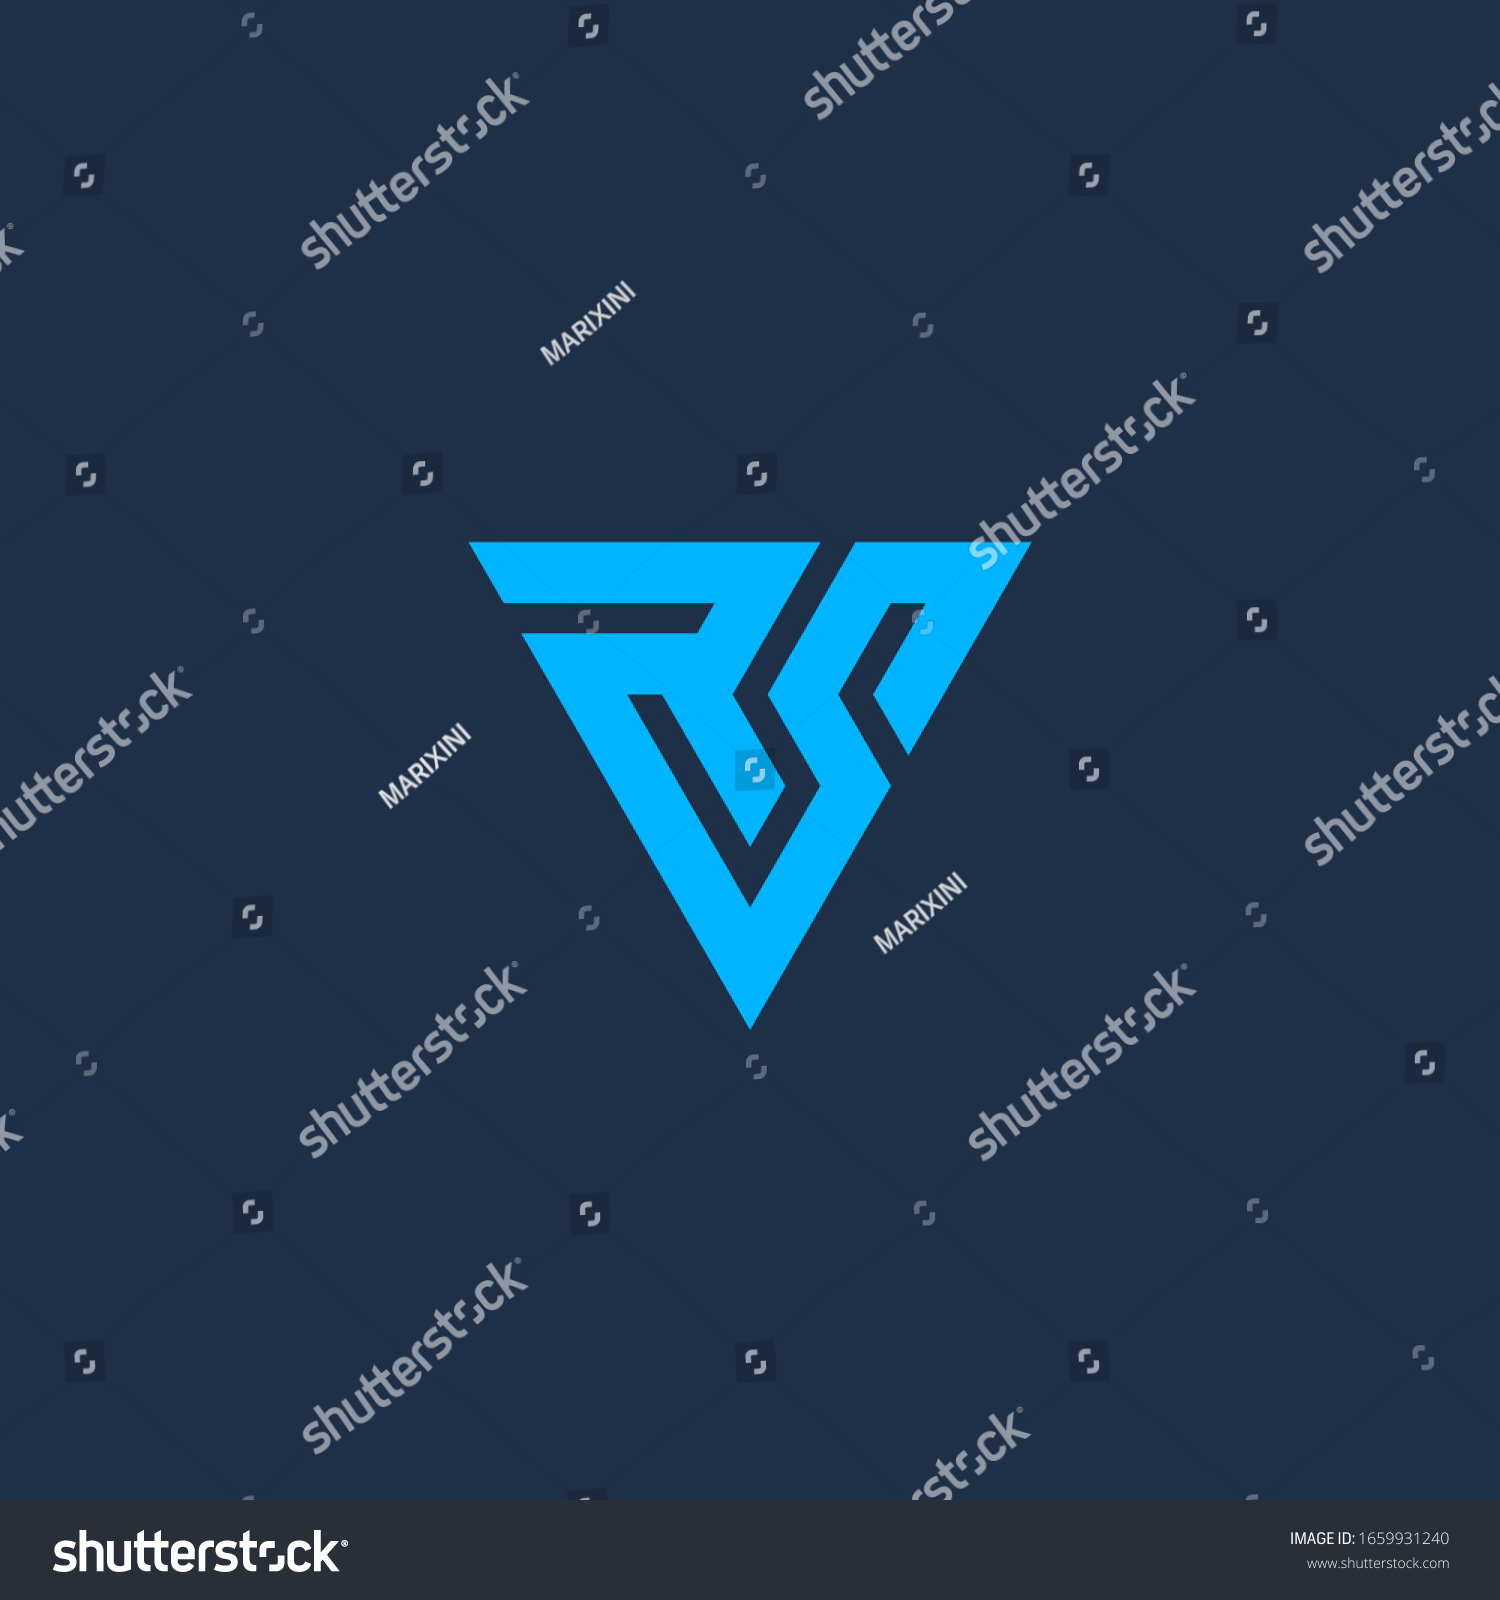 Rs Monogram Logo Triange Shape Stock Vector Royalty Free Shutterstock